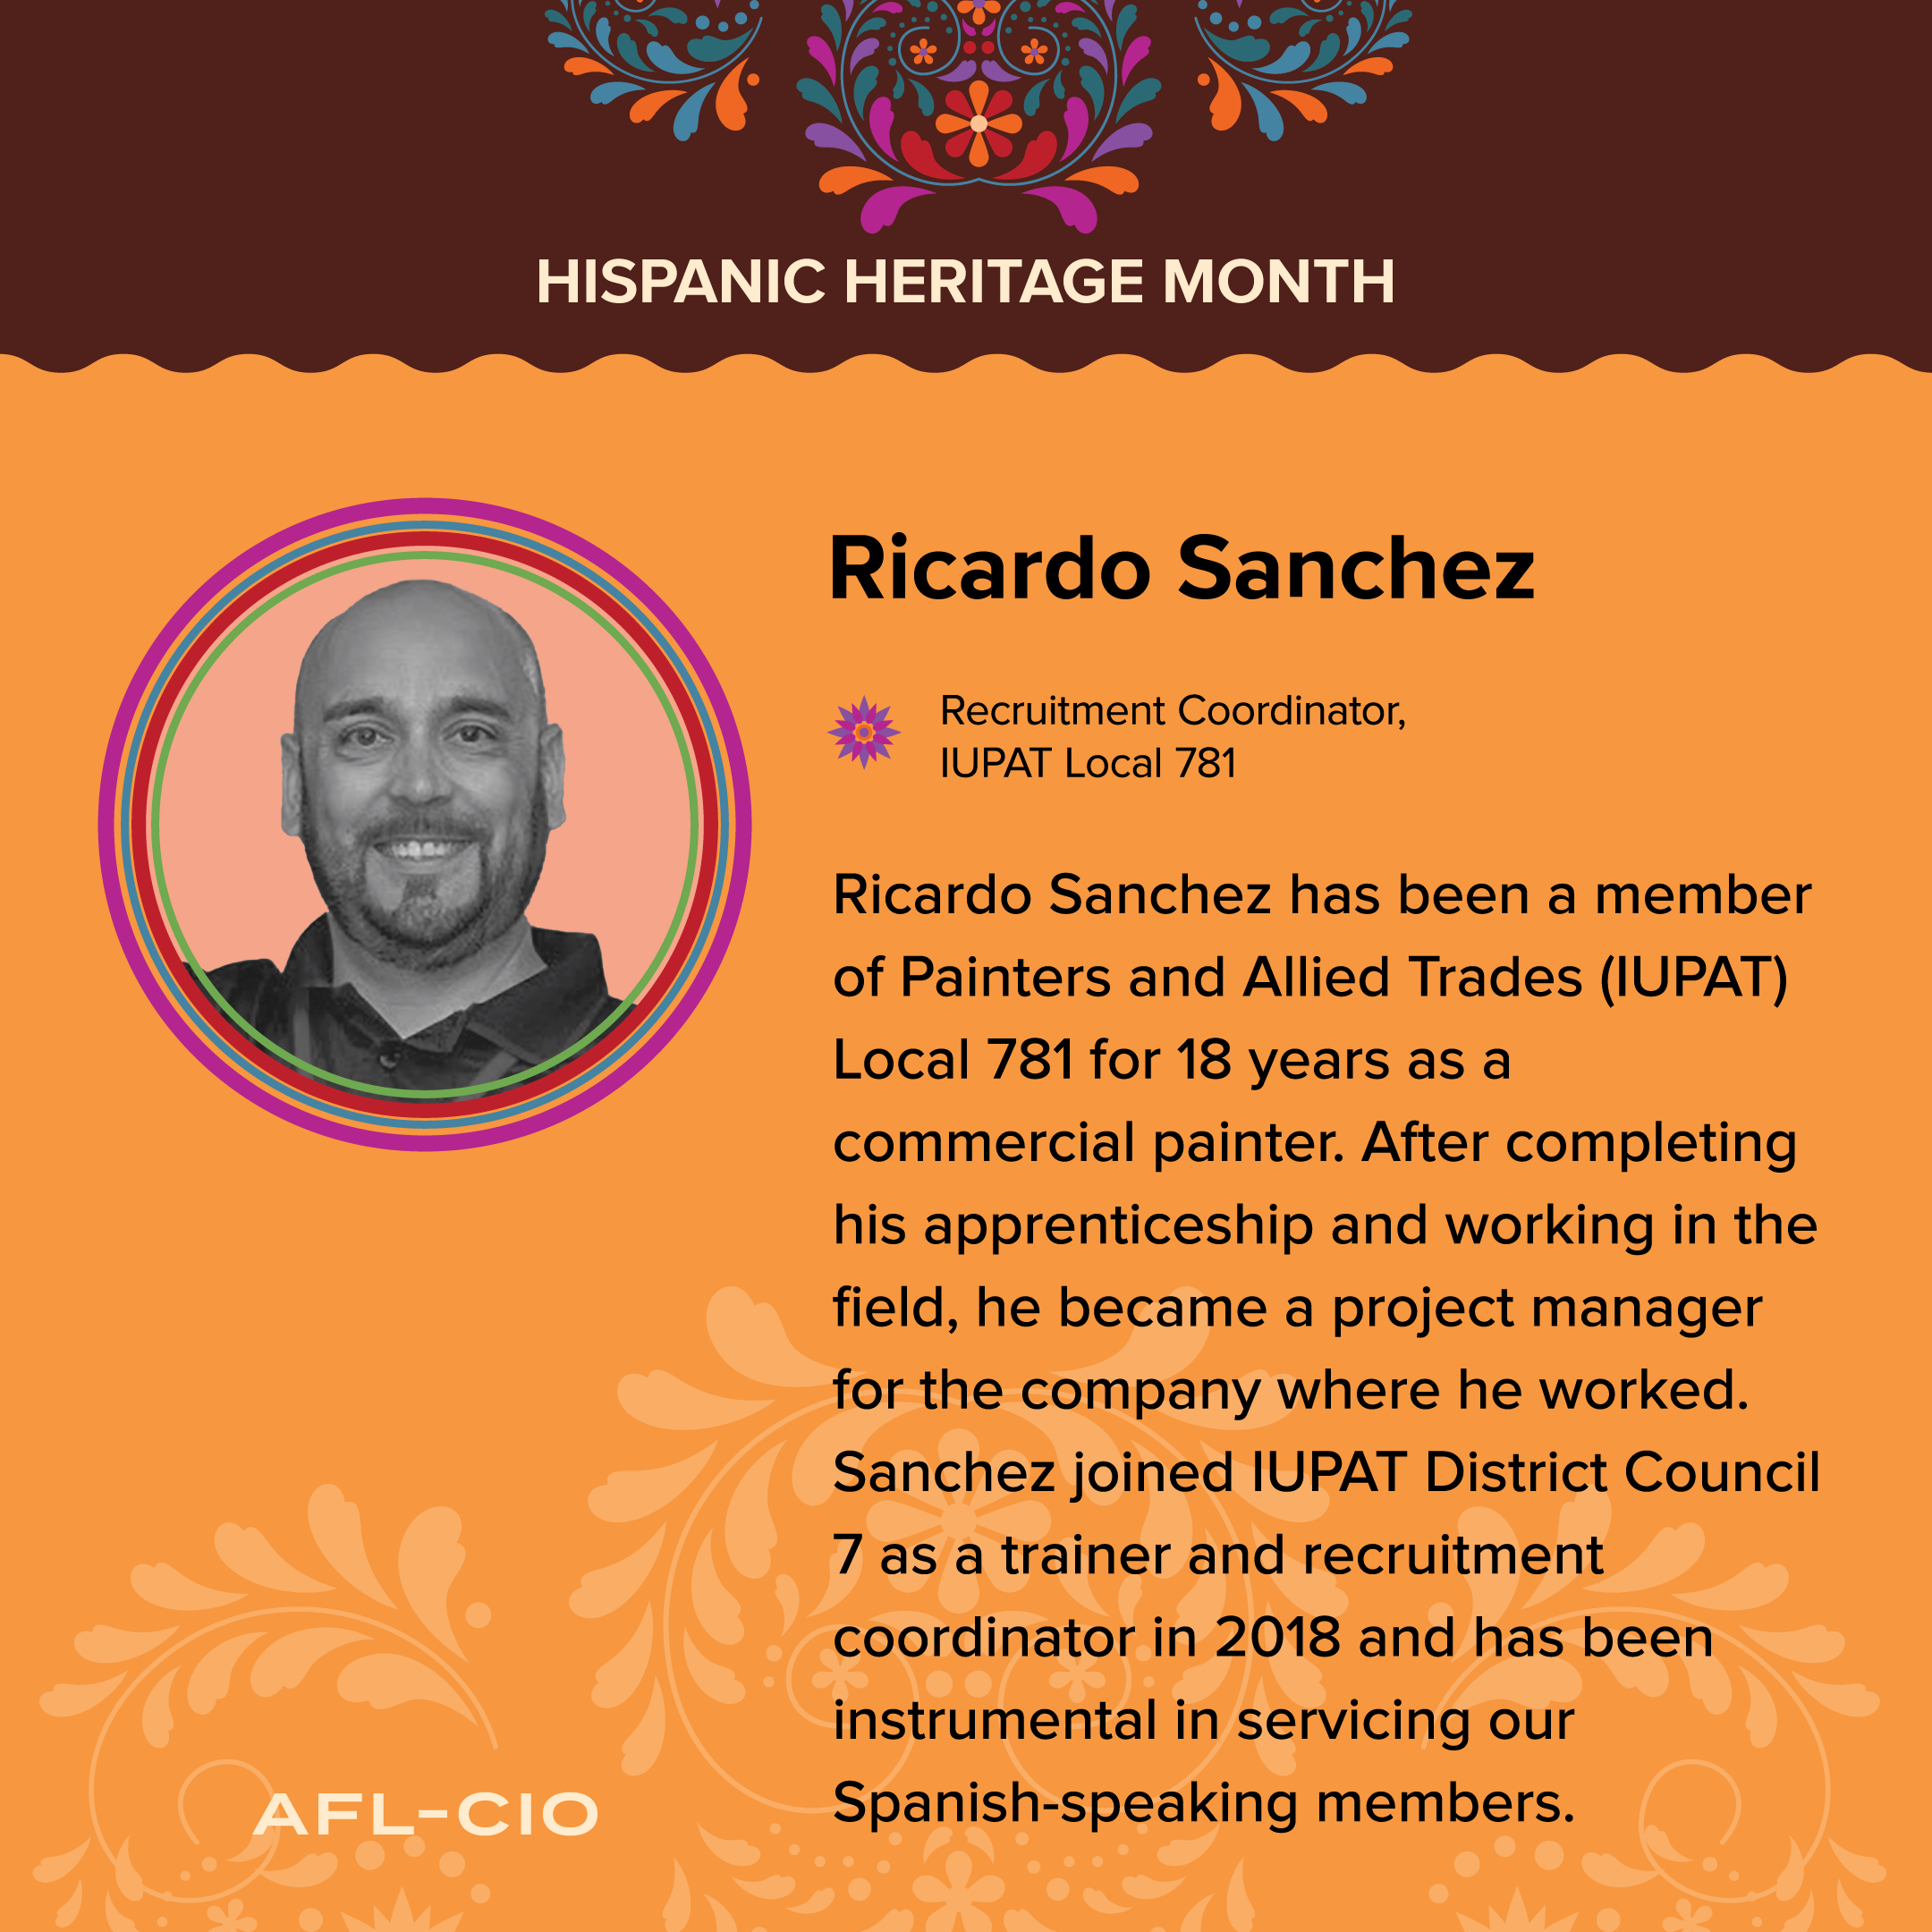 Hispanic Heritage Month Profiles: Ricardo Sanchez